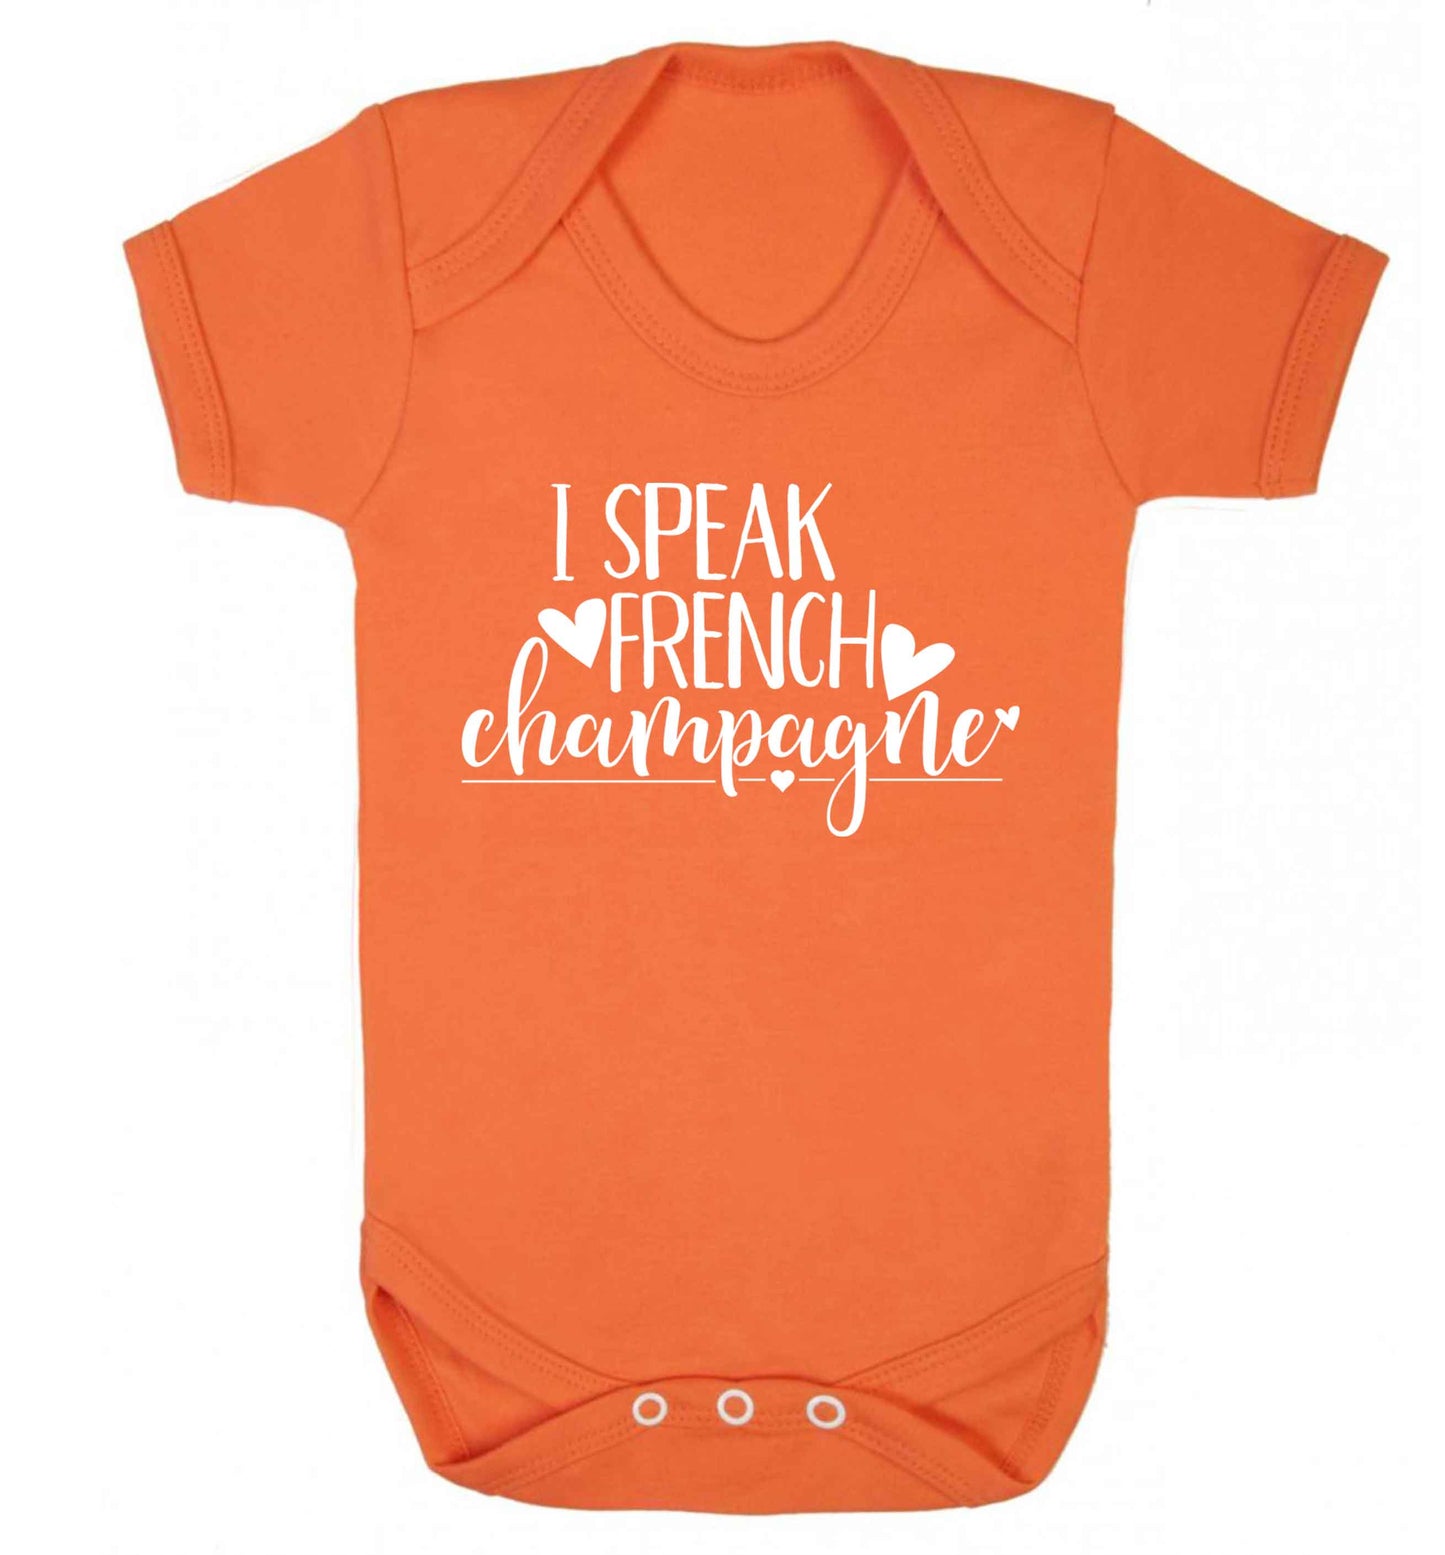 I speak french champagne Baby Vest orange 18-24 months